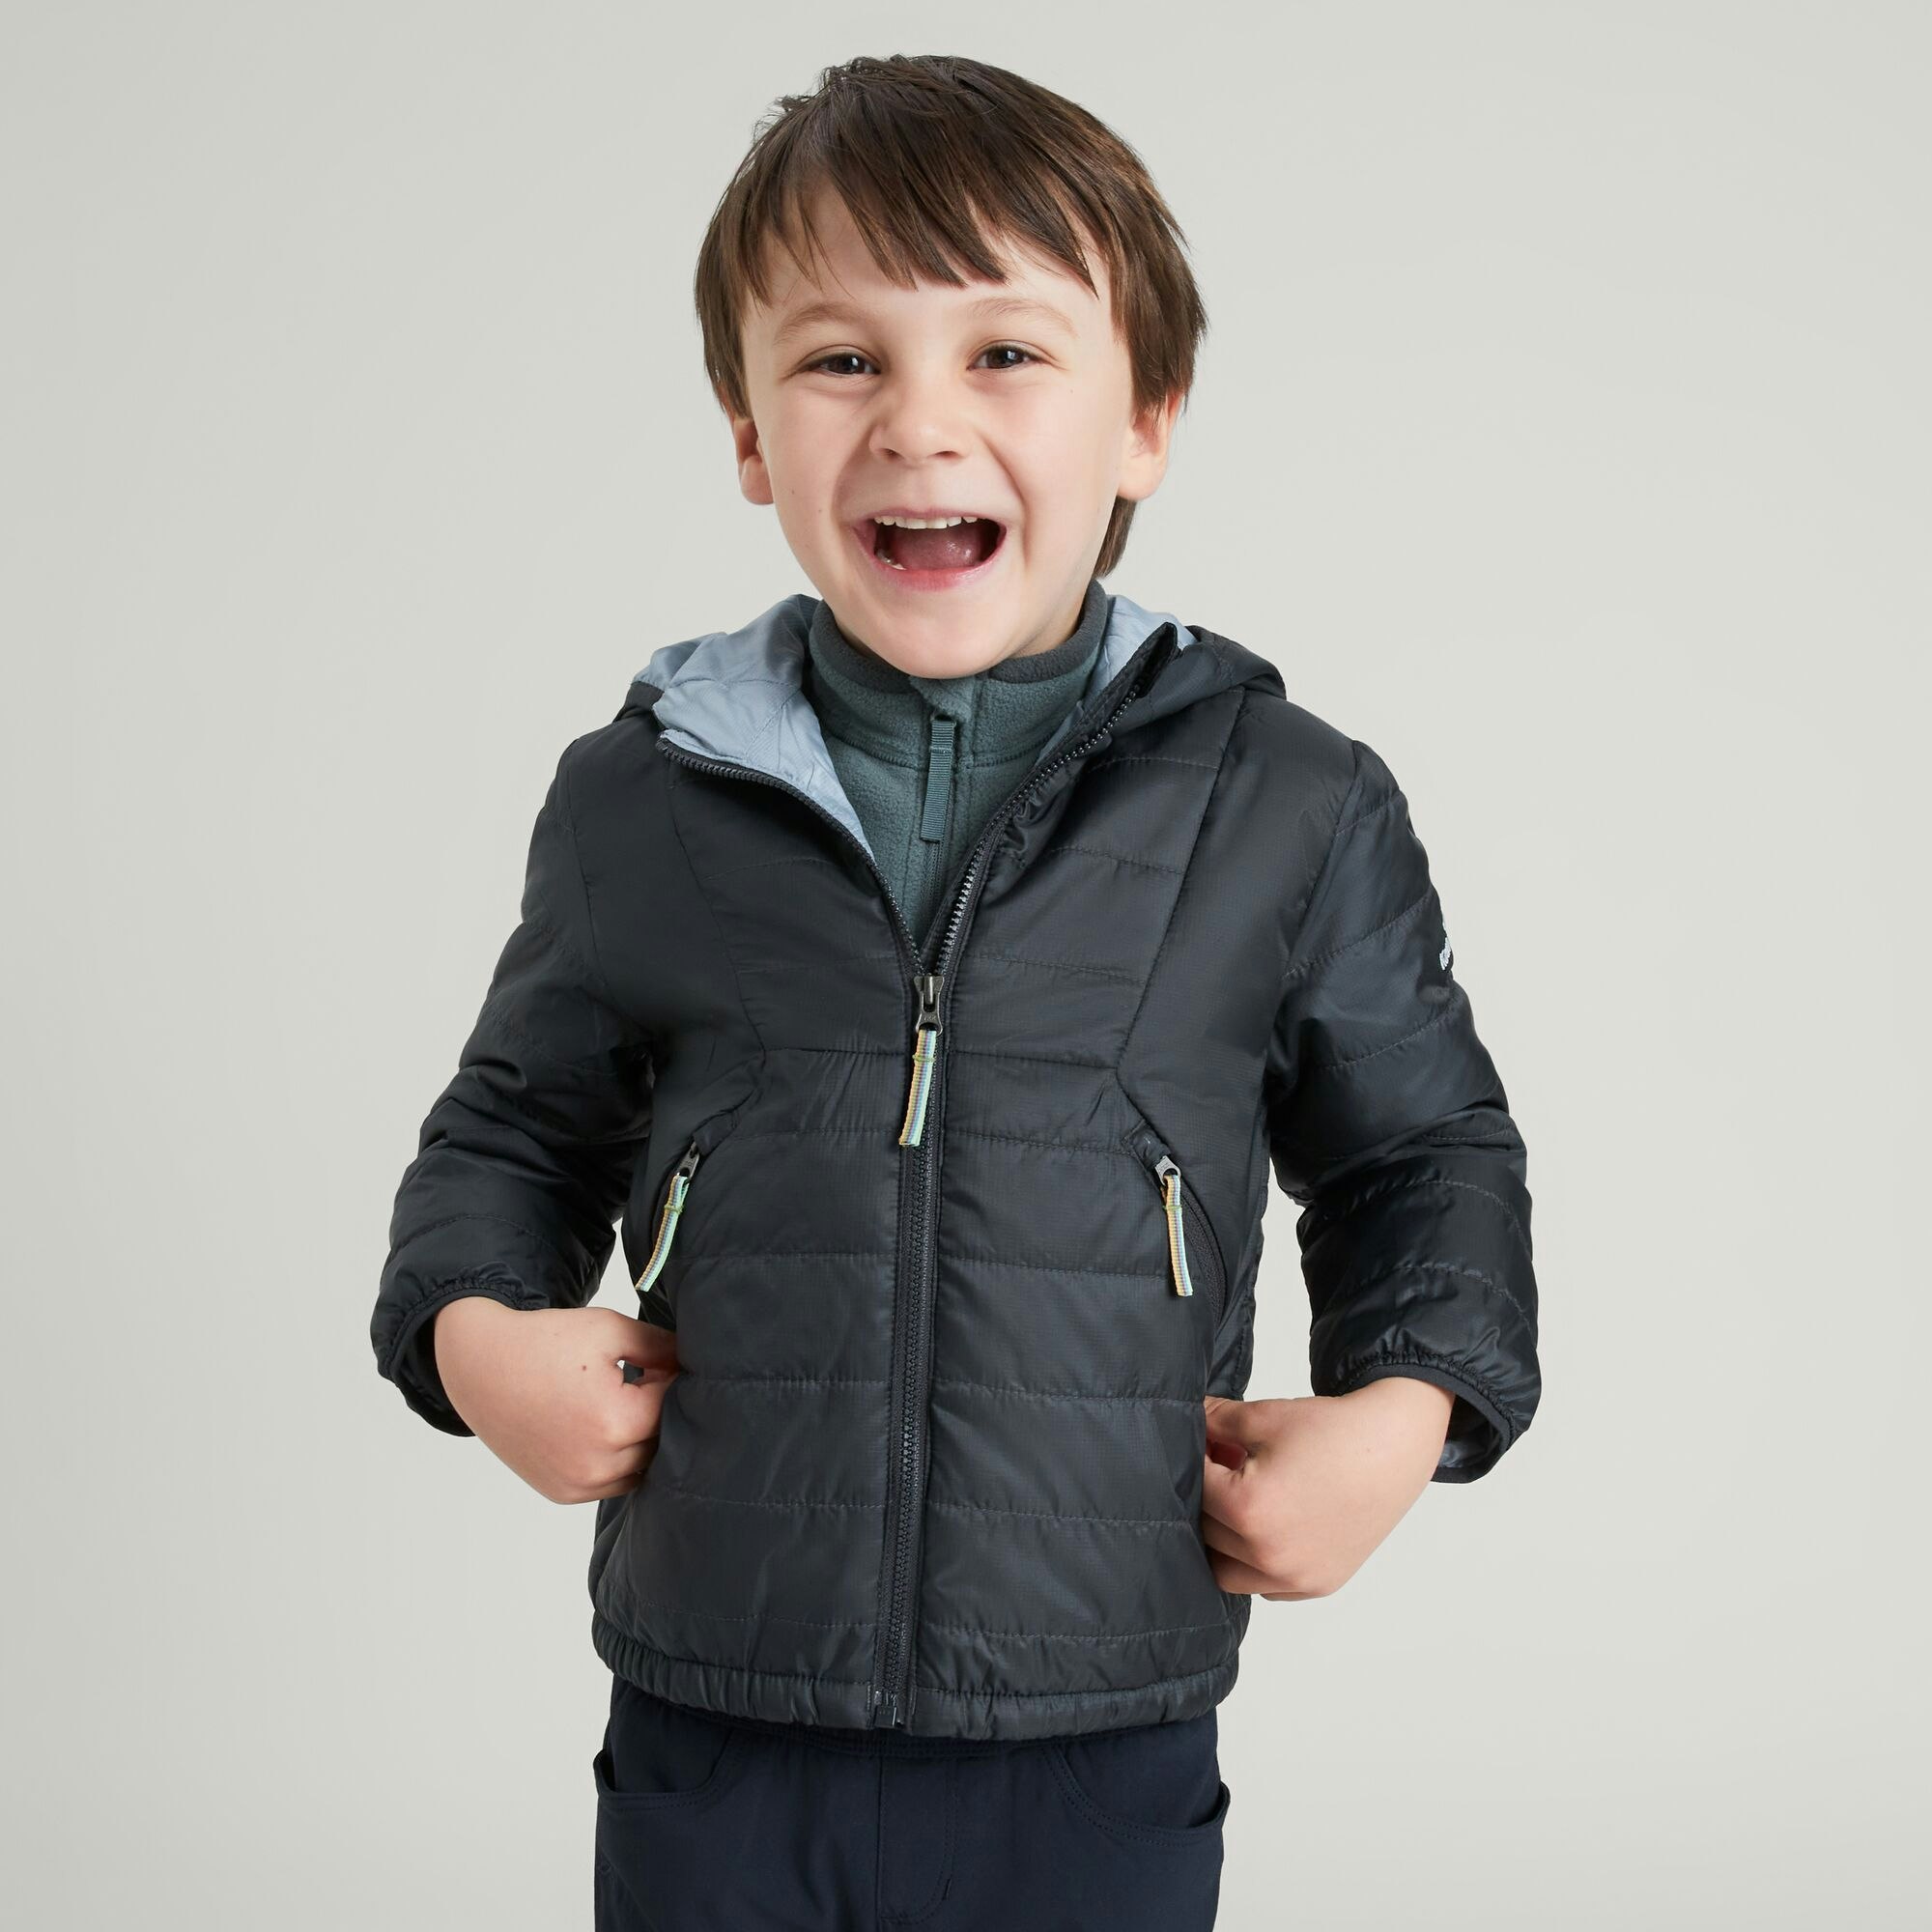 Clearance: Heli R Kids' Unisex novaLOFT Hooded Jacket